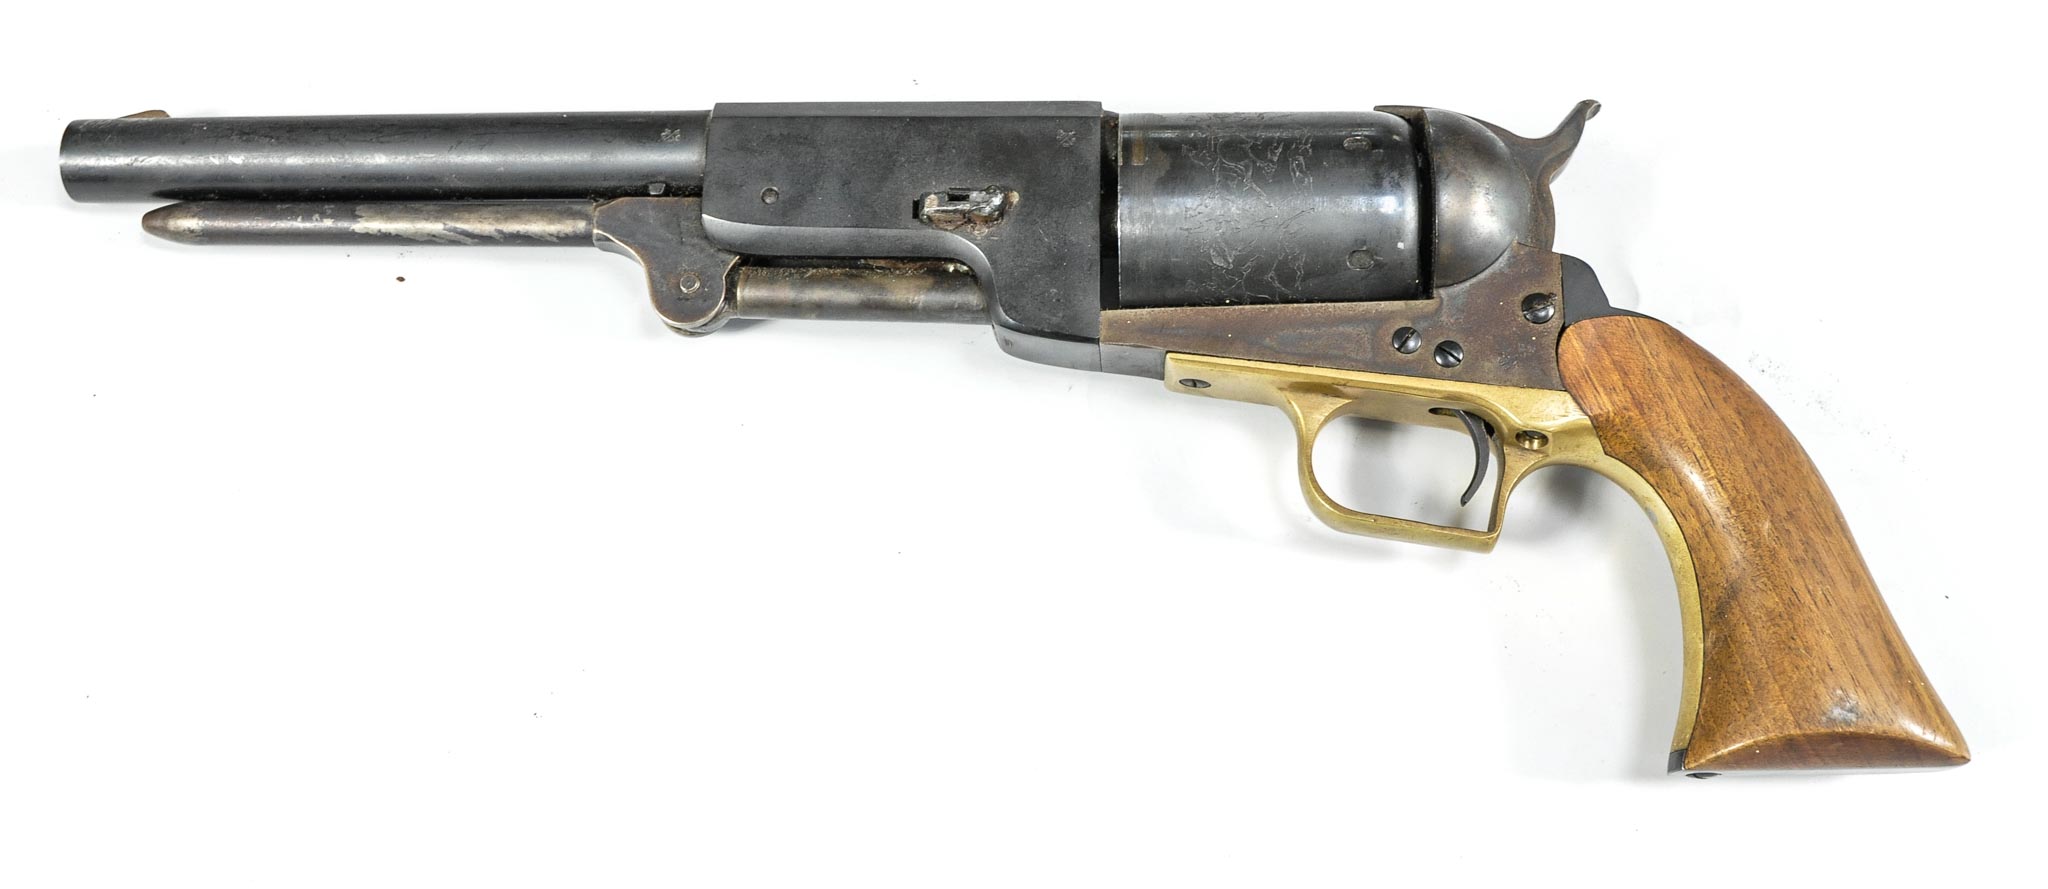 WITHDRAWN - Replica dragoon type Percussion revolver by Henri Crank Company Limited, .